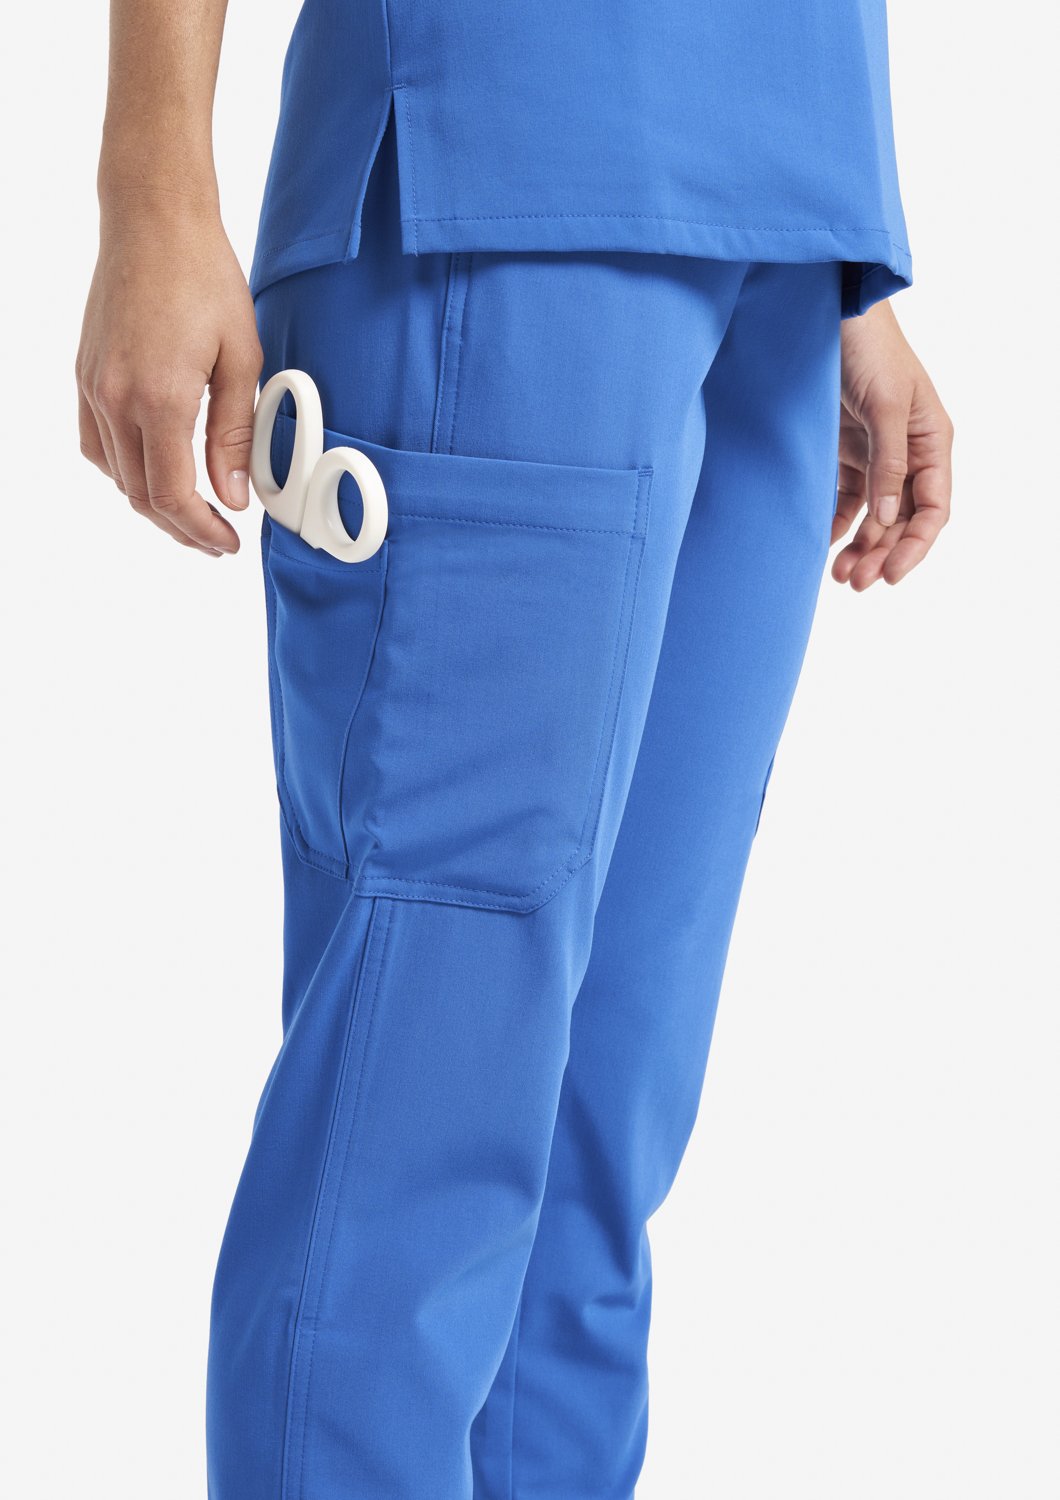 LAGO Scrubs - Women's Royal Blue Paulina - 5-Pocket Scrub Pants